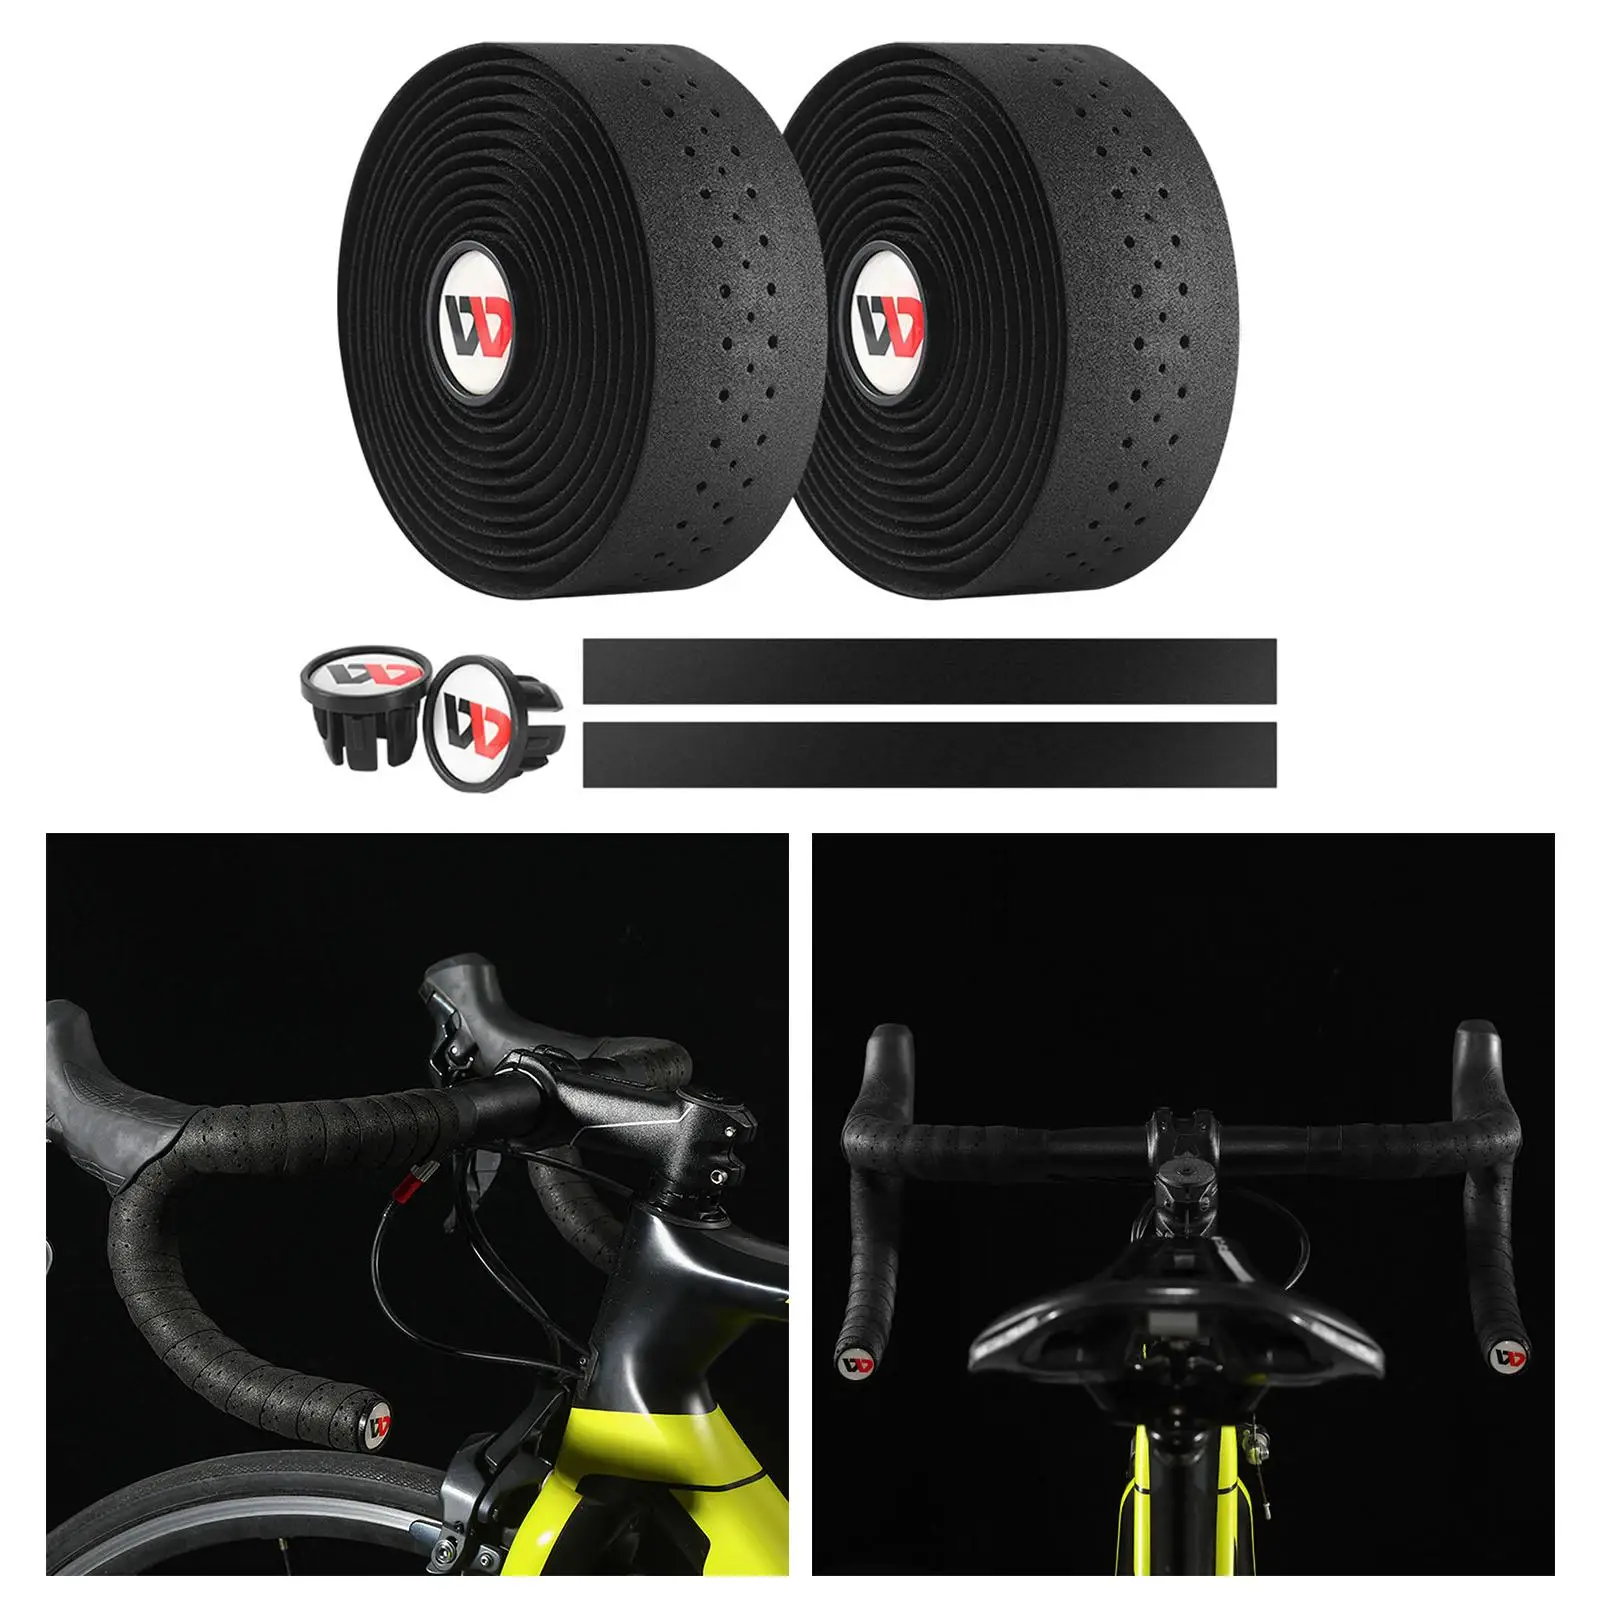 EVA Road Bike Handlebar Tapes, Bicycle Bar Tape, Cycling Handle Bar Wraps - 2 Rolls